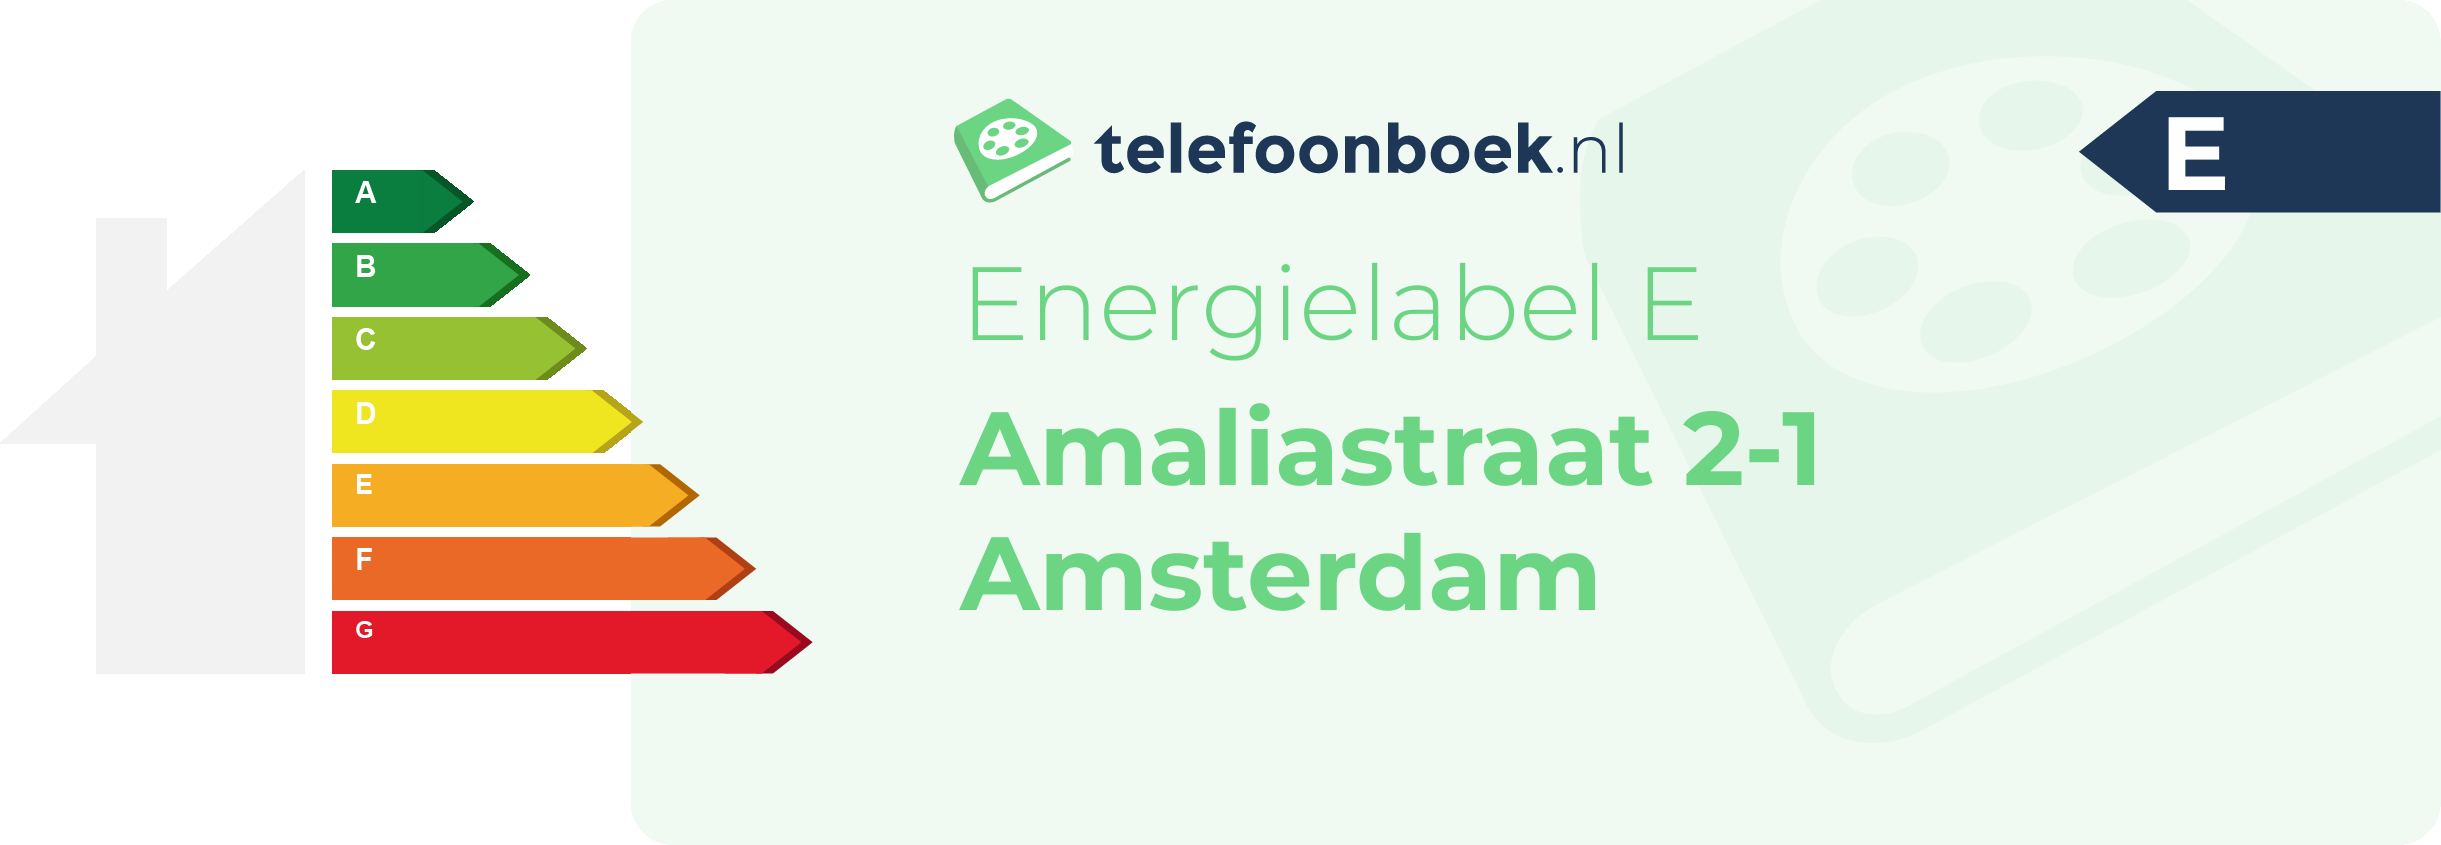 Energielabel Amaliastraat 2-1 Amsterdam